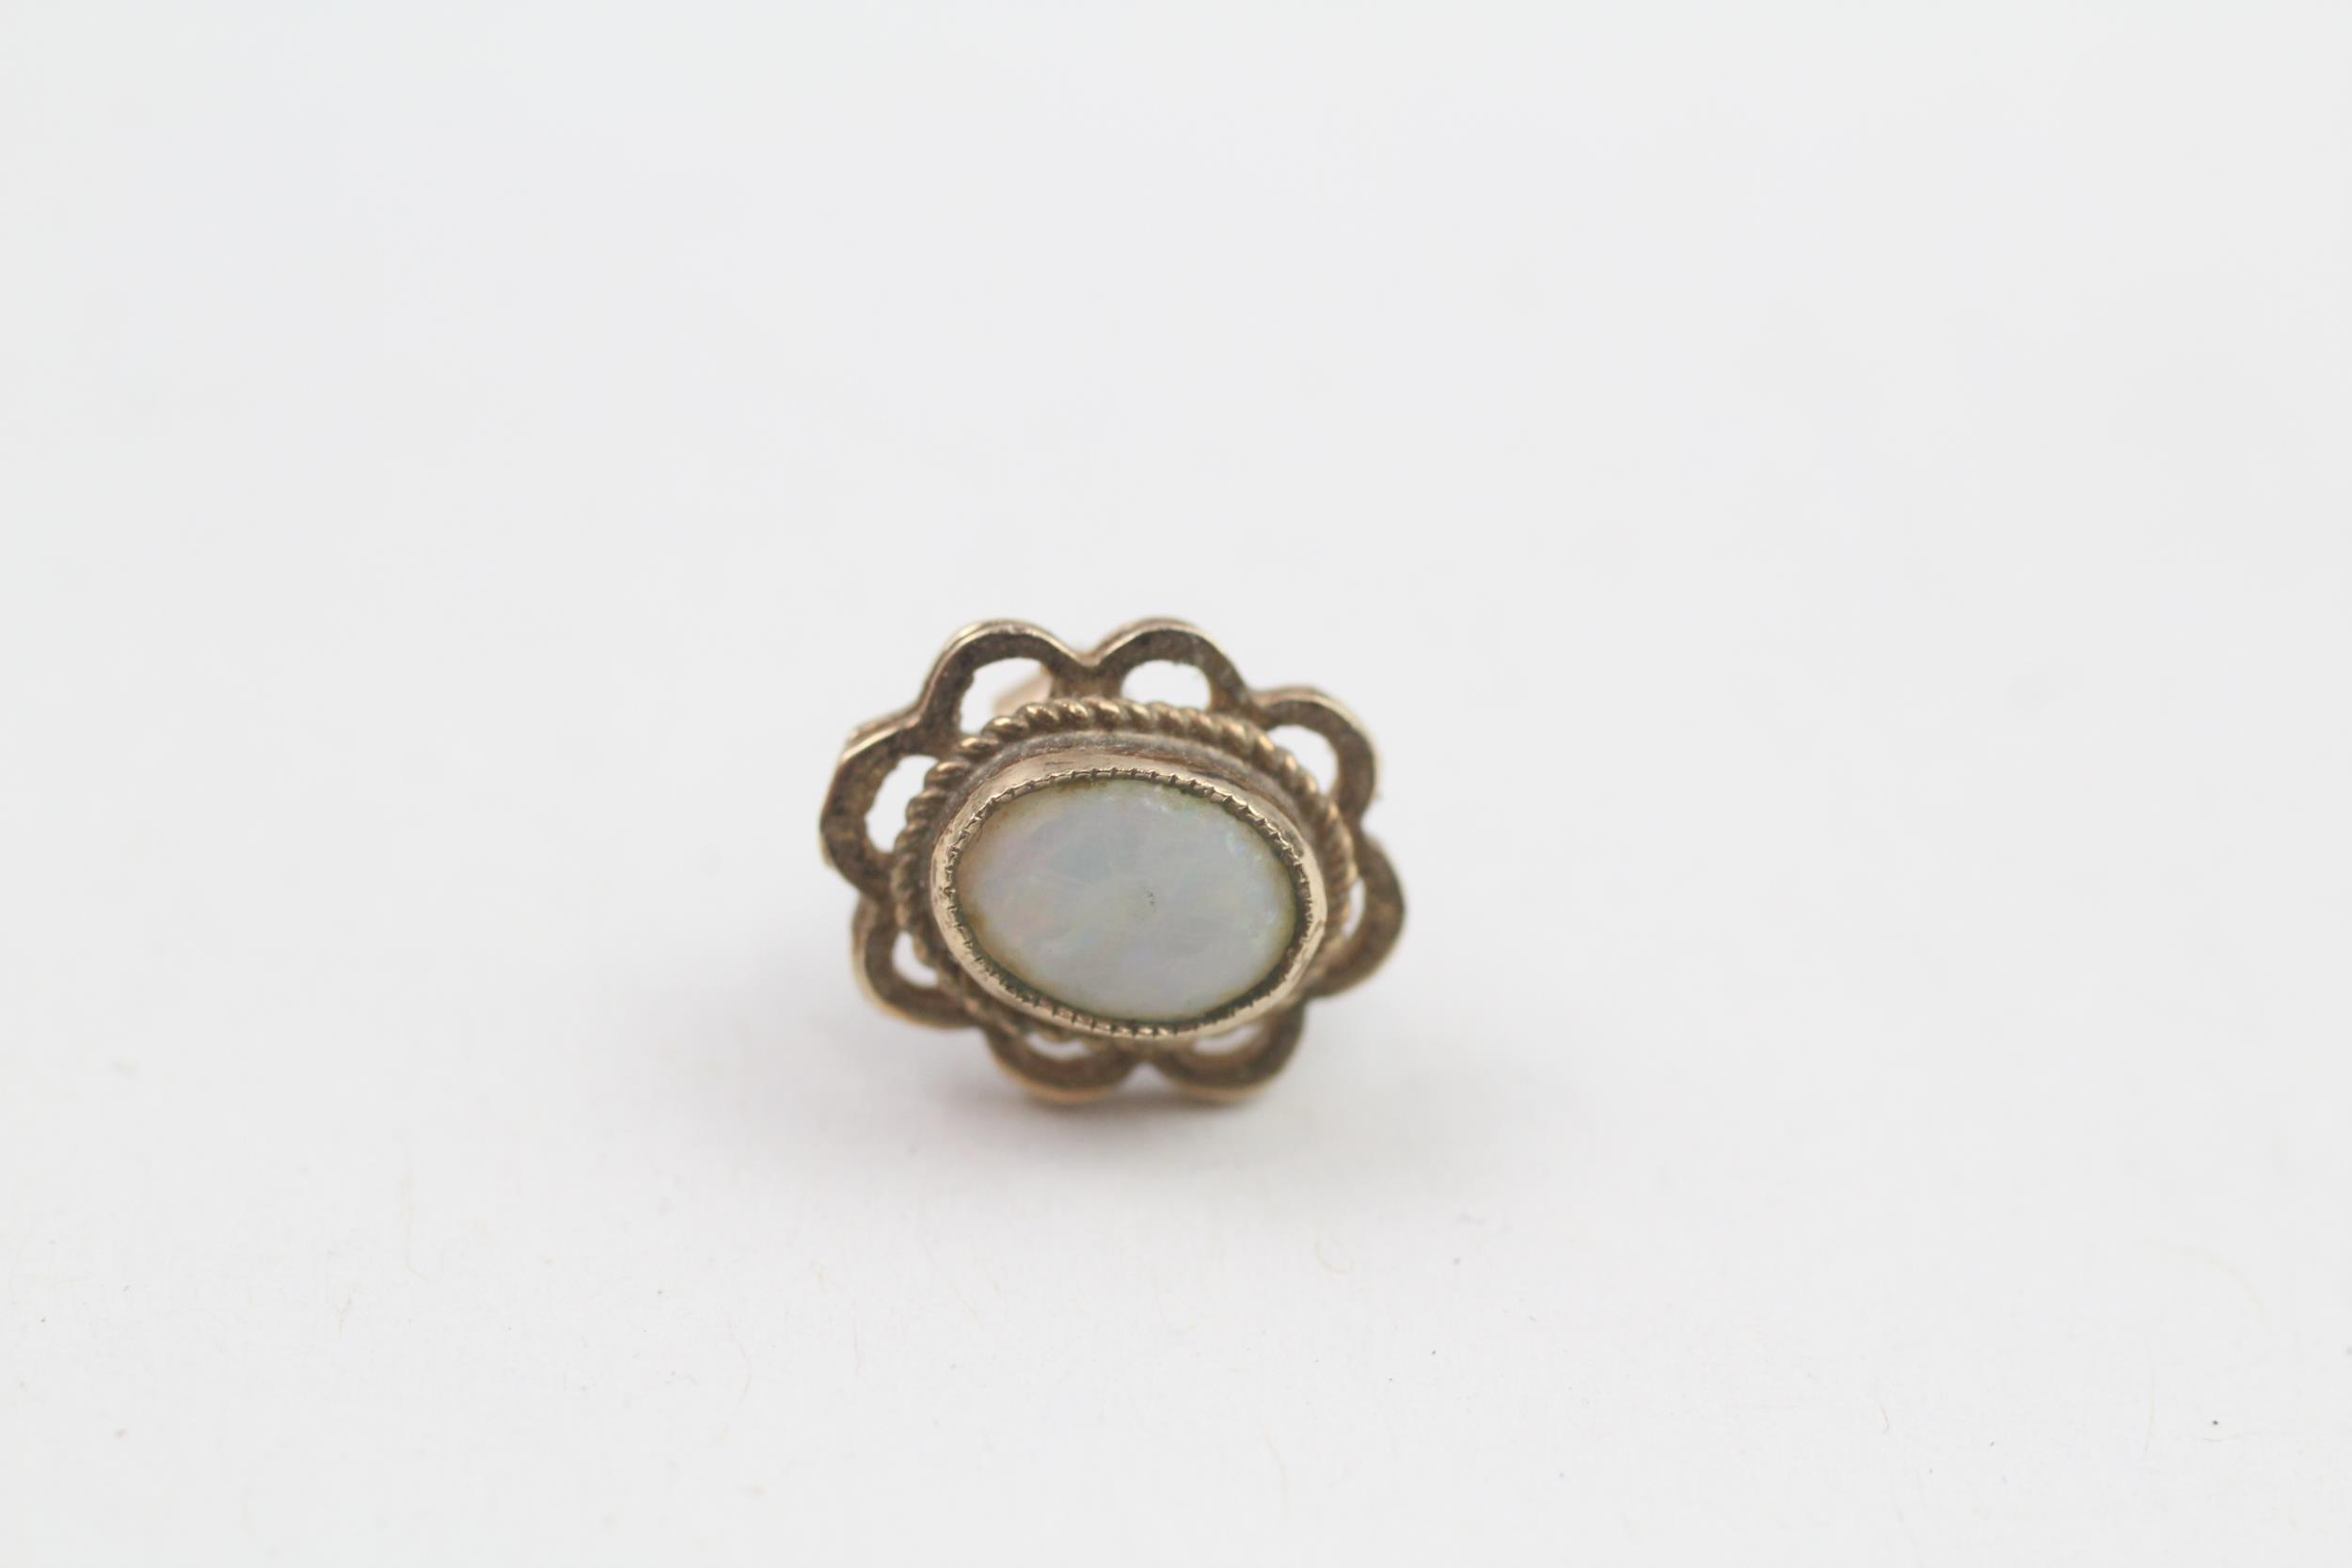 9ct gold opal stud earrings, scroll backs (2g) - Image 2 of 4